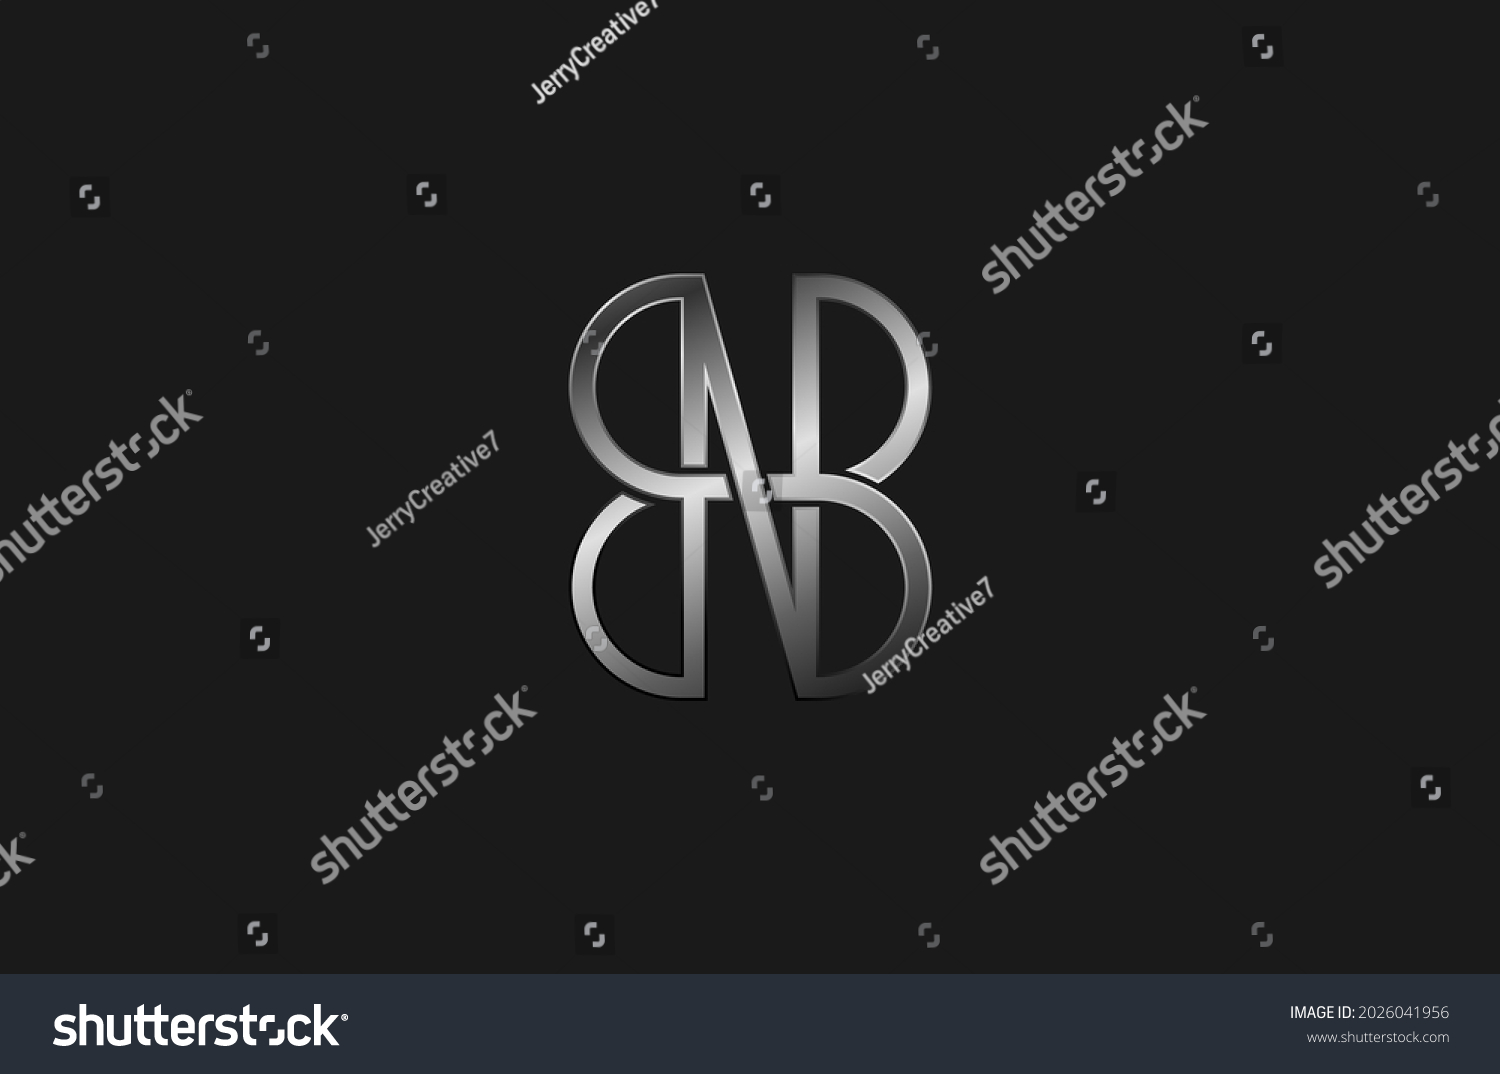 SVG of BNB monogram Logo design inspiration, perfect for personal or brand business logo, vector illustration svg